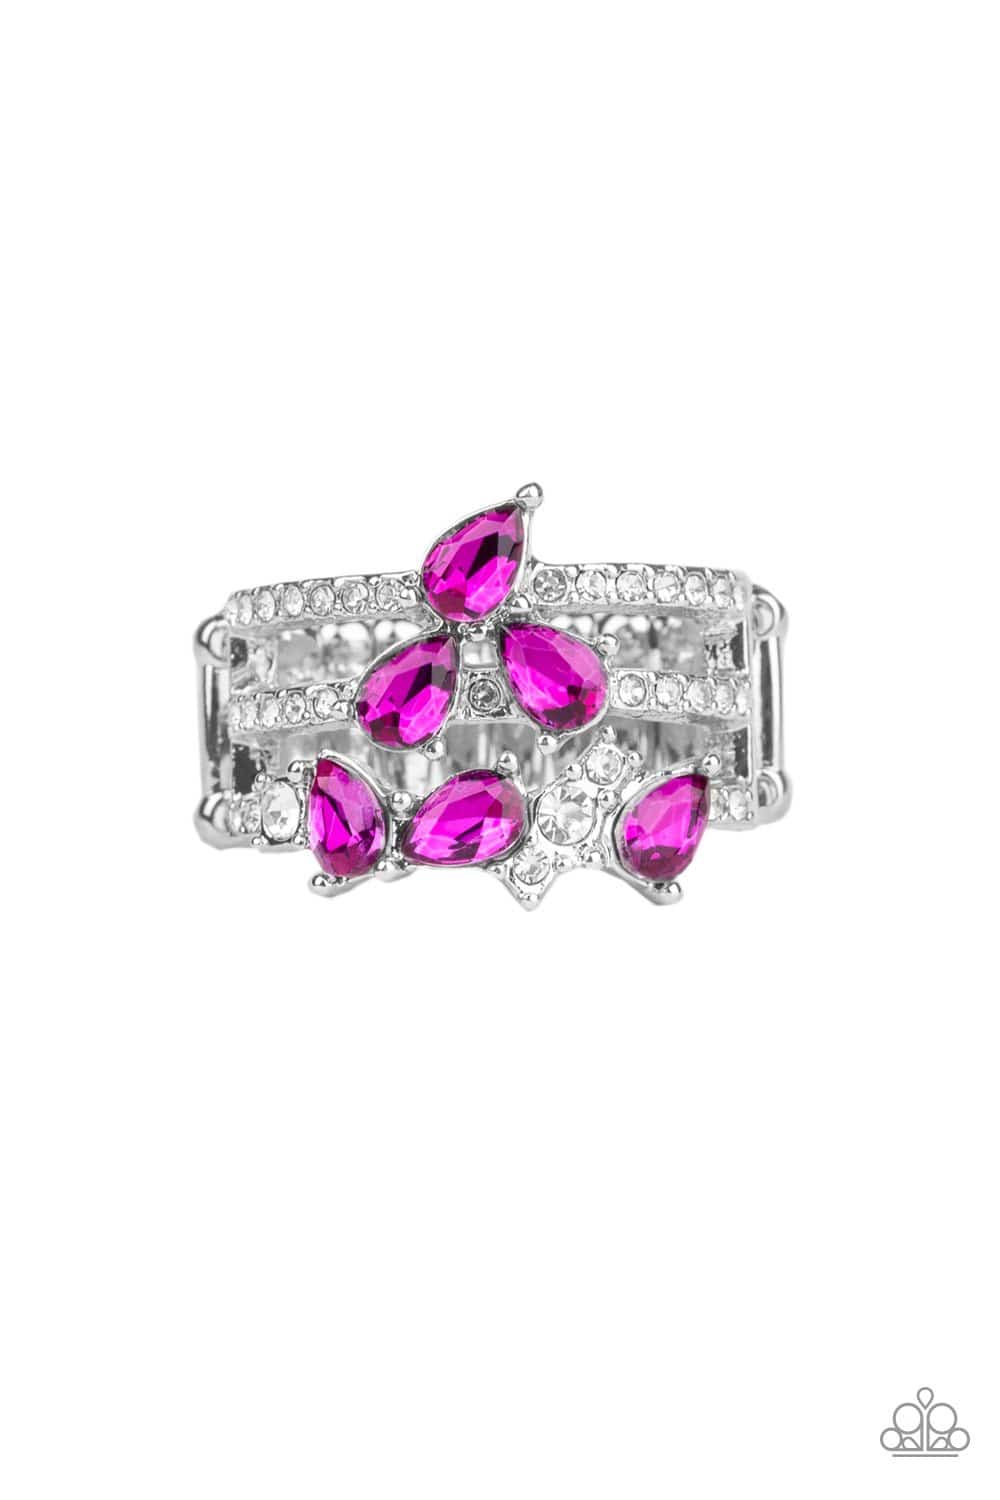 Blink Back TIERS - Pink Teardrop Rhinestone Ring - Paparazzi Accessories - GlaMarous Titi Jewels